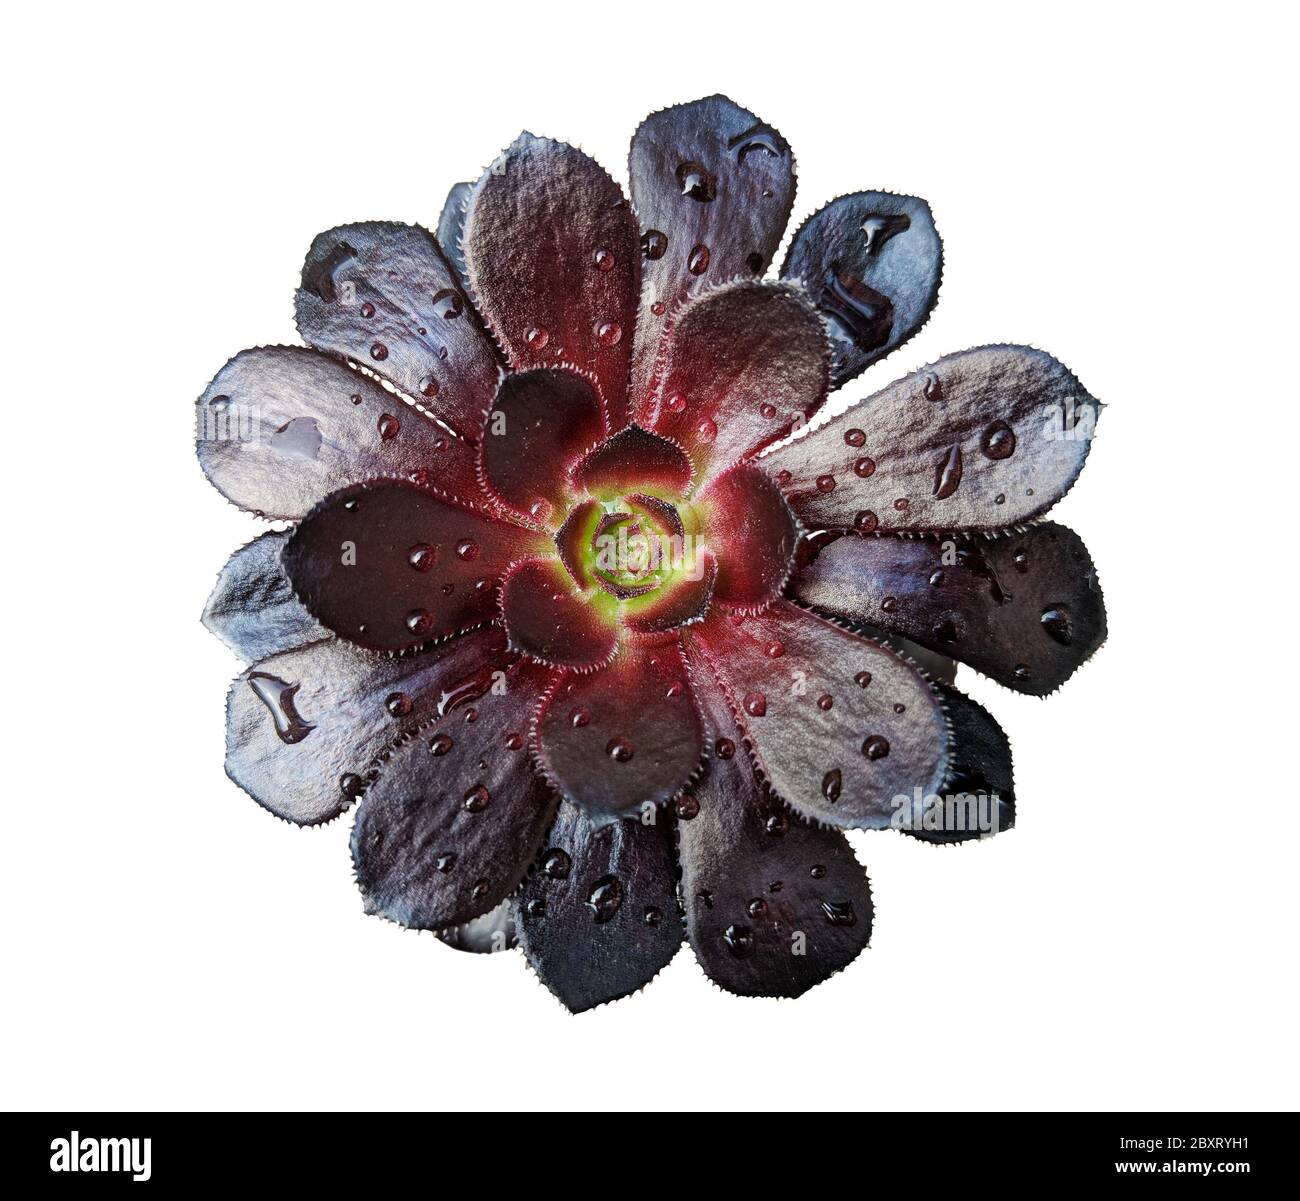 Árbol de color negro de aeonium roseta con gotas de agua Foto de stock